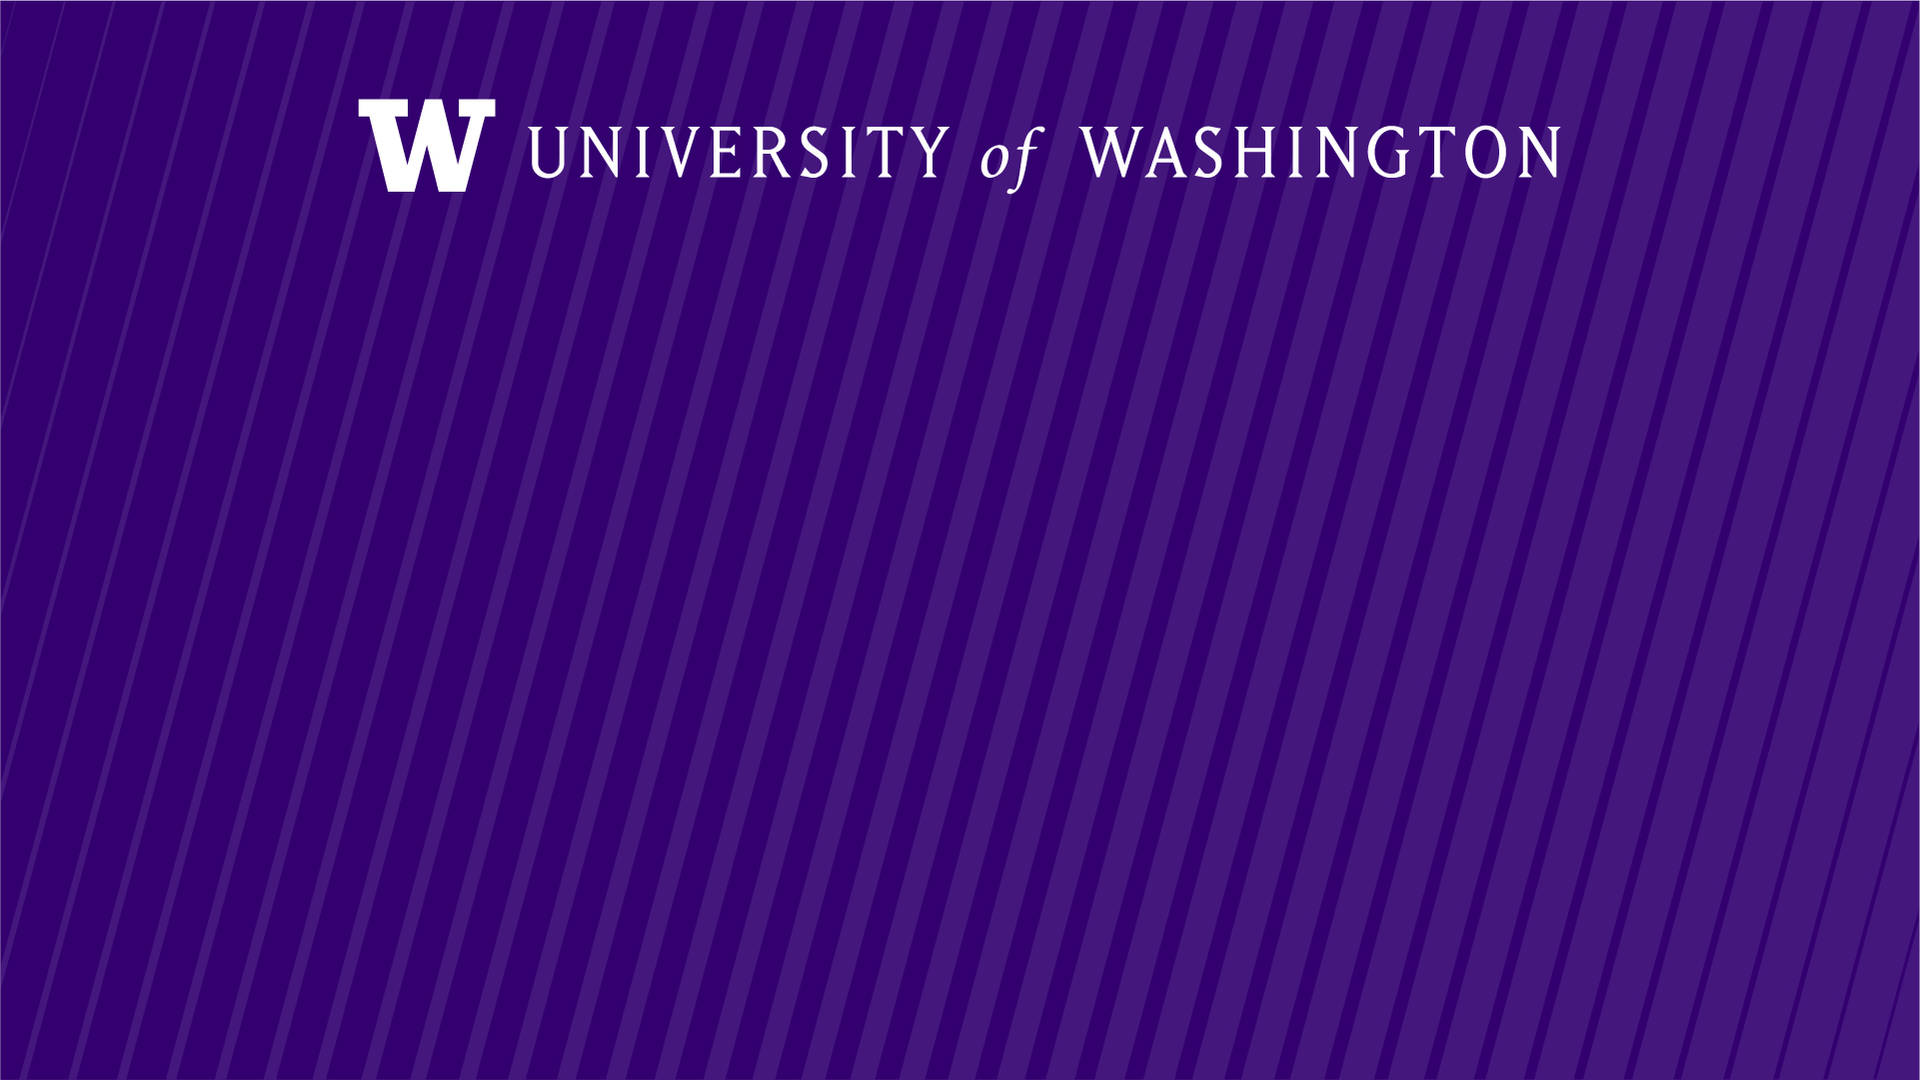 University Of Washington Slanted Striped Backdrop Wallpaper